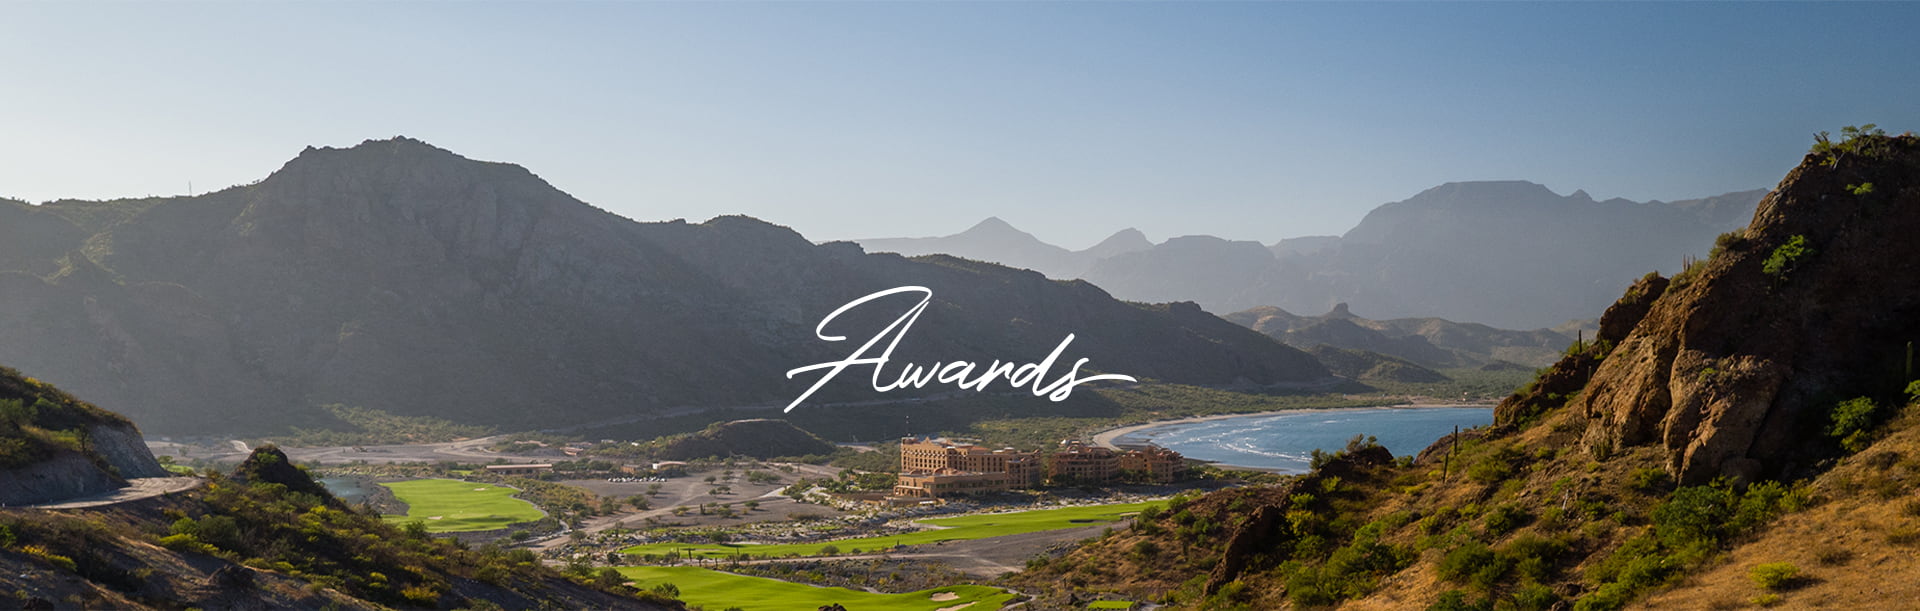 Awards in Villa del Palmar at The Islands of Loreto